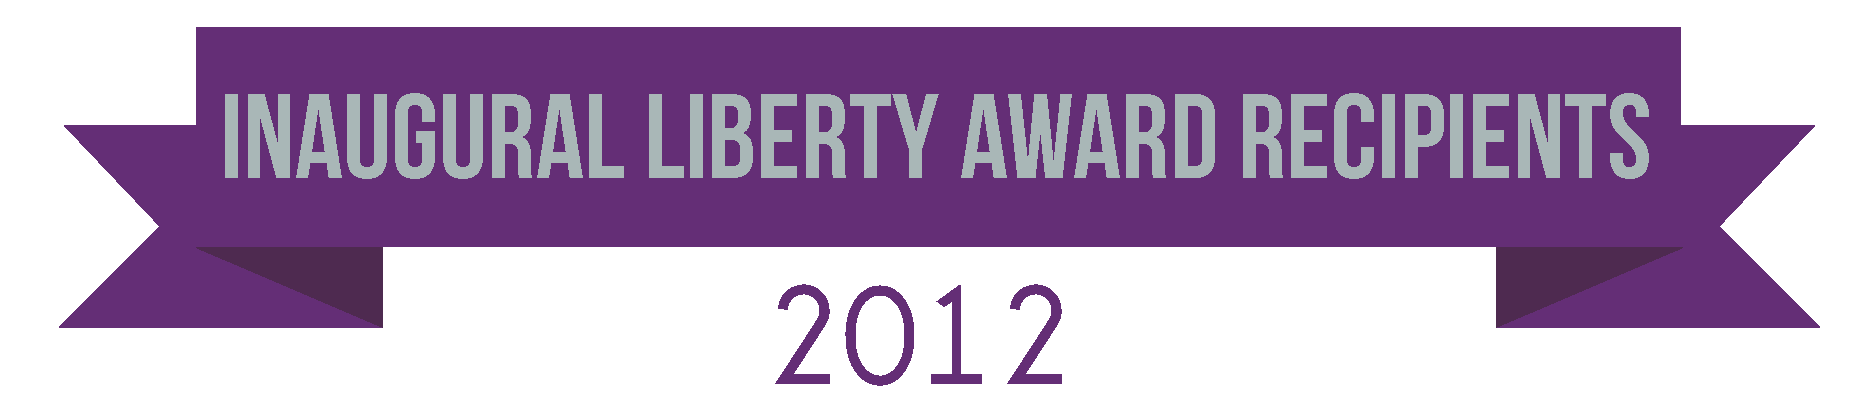 Liberty Awards Gala Recepients